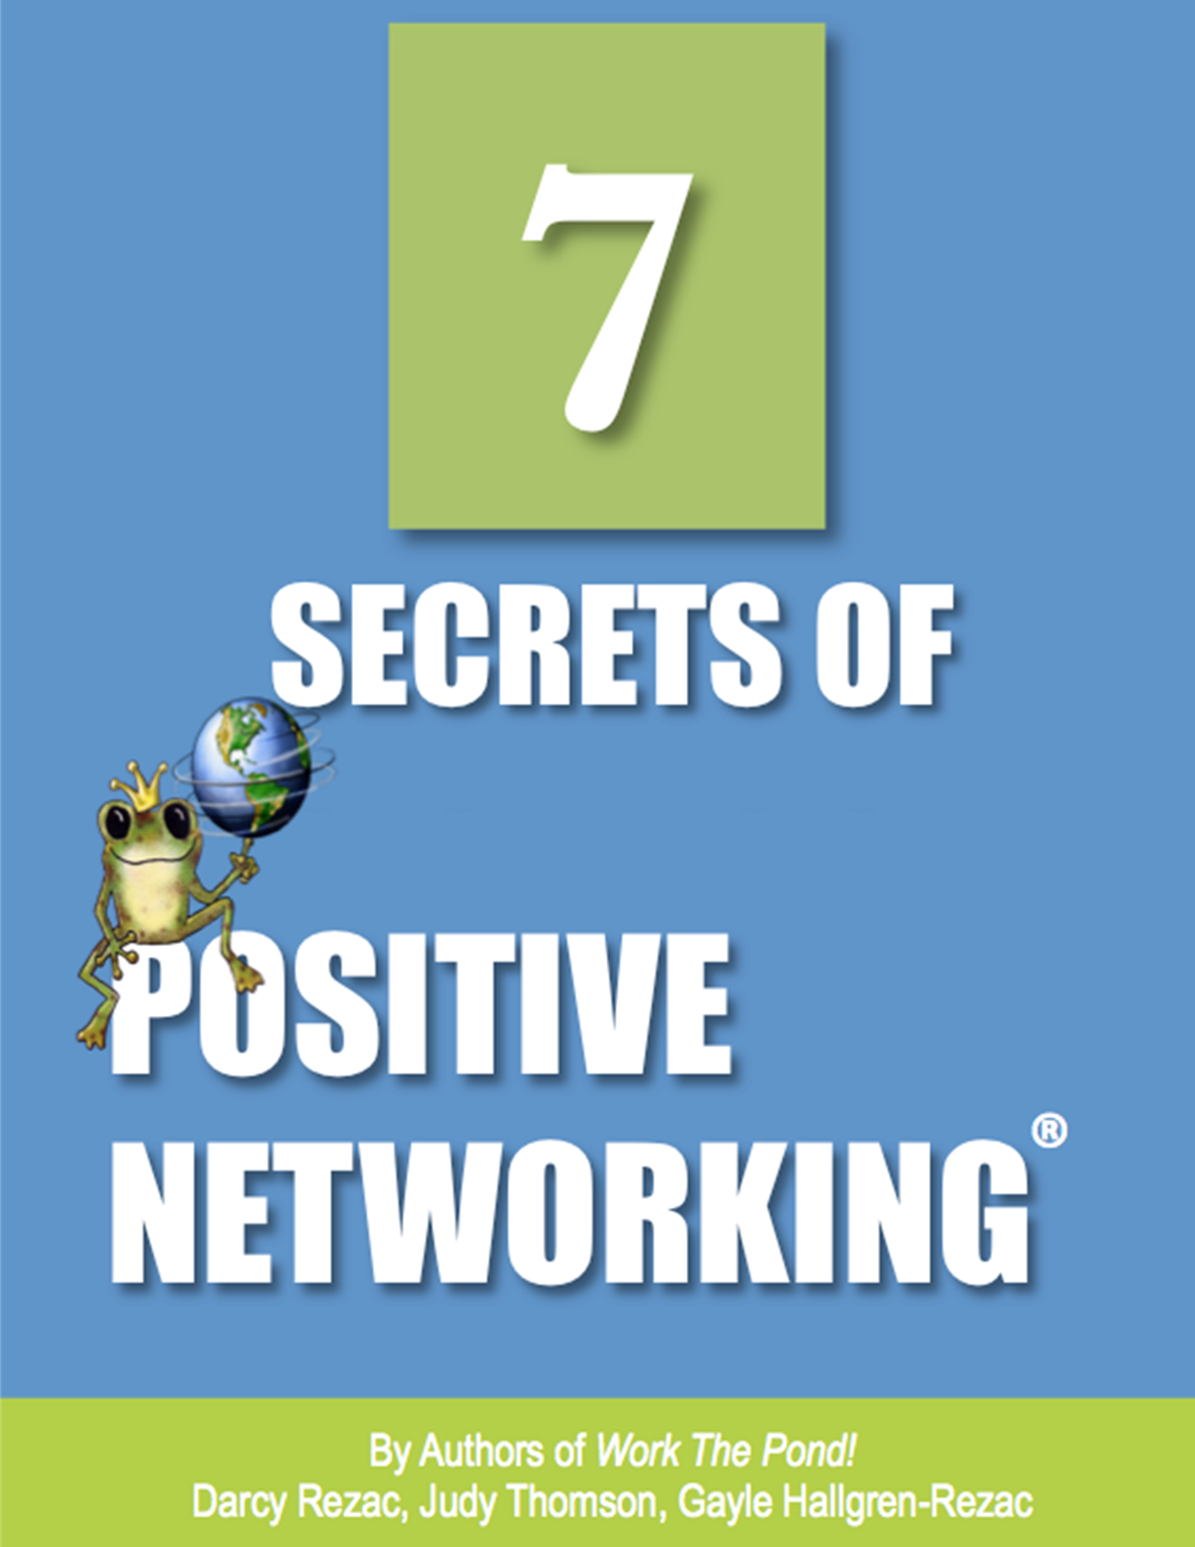 7 secrets of positive networking by Shepa Learning